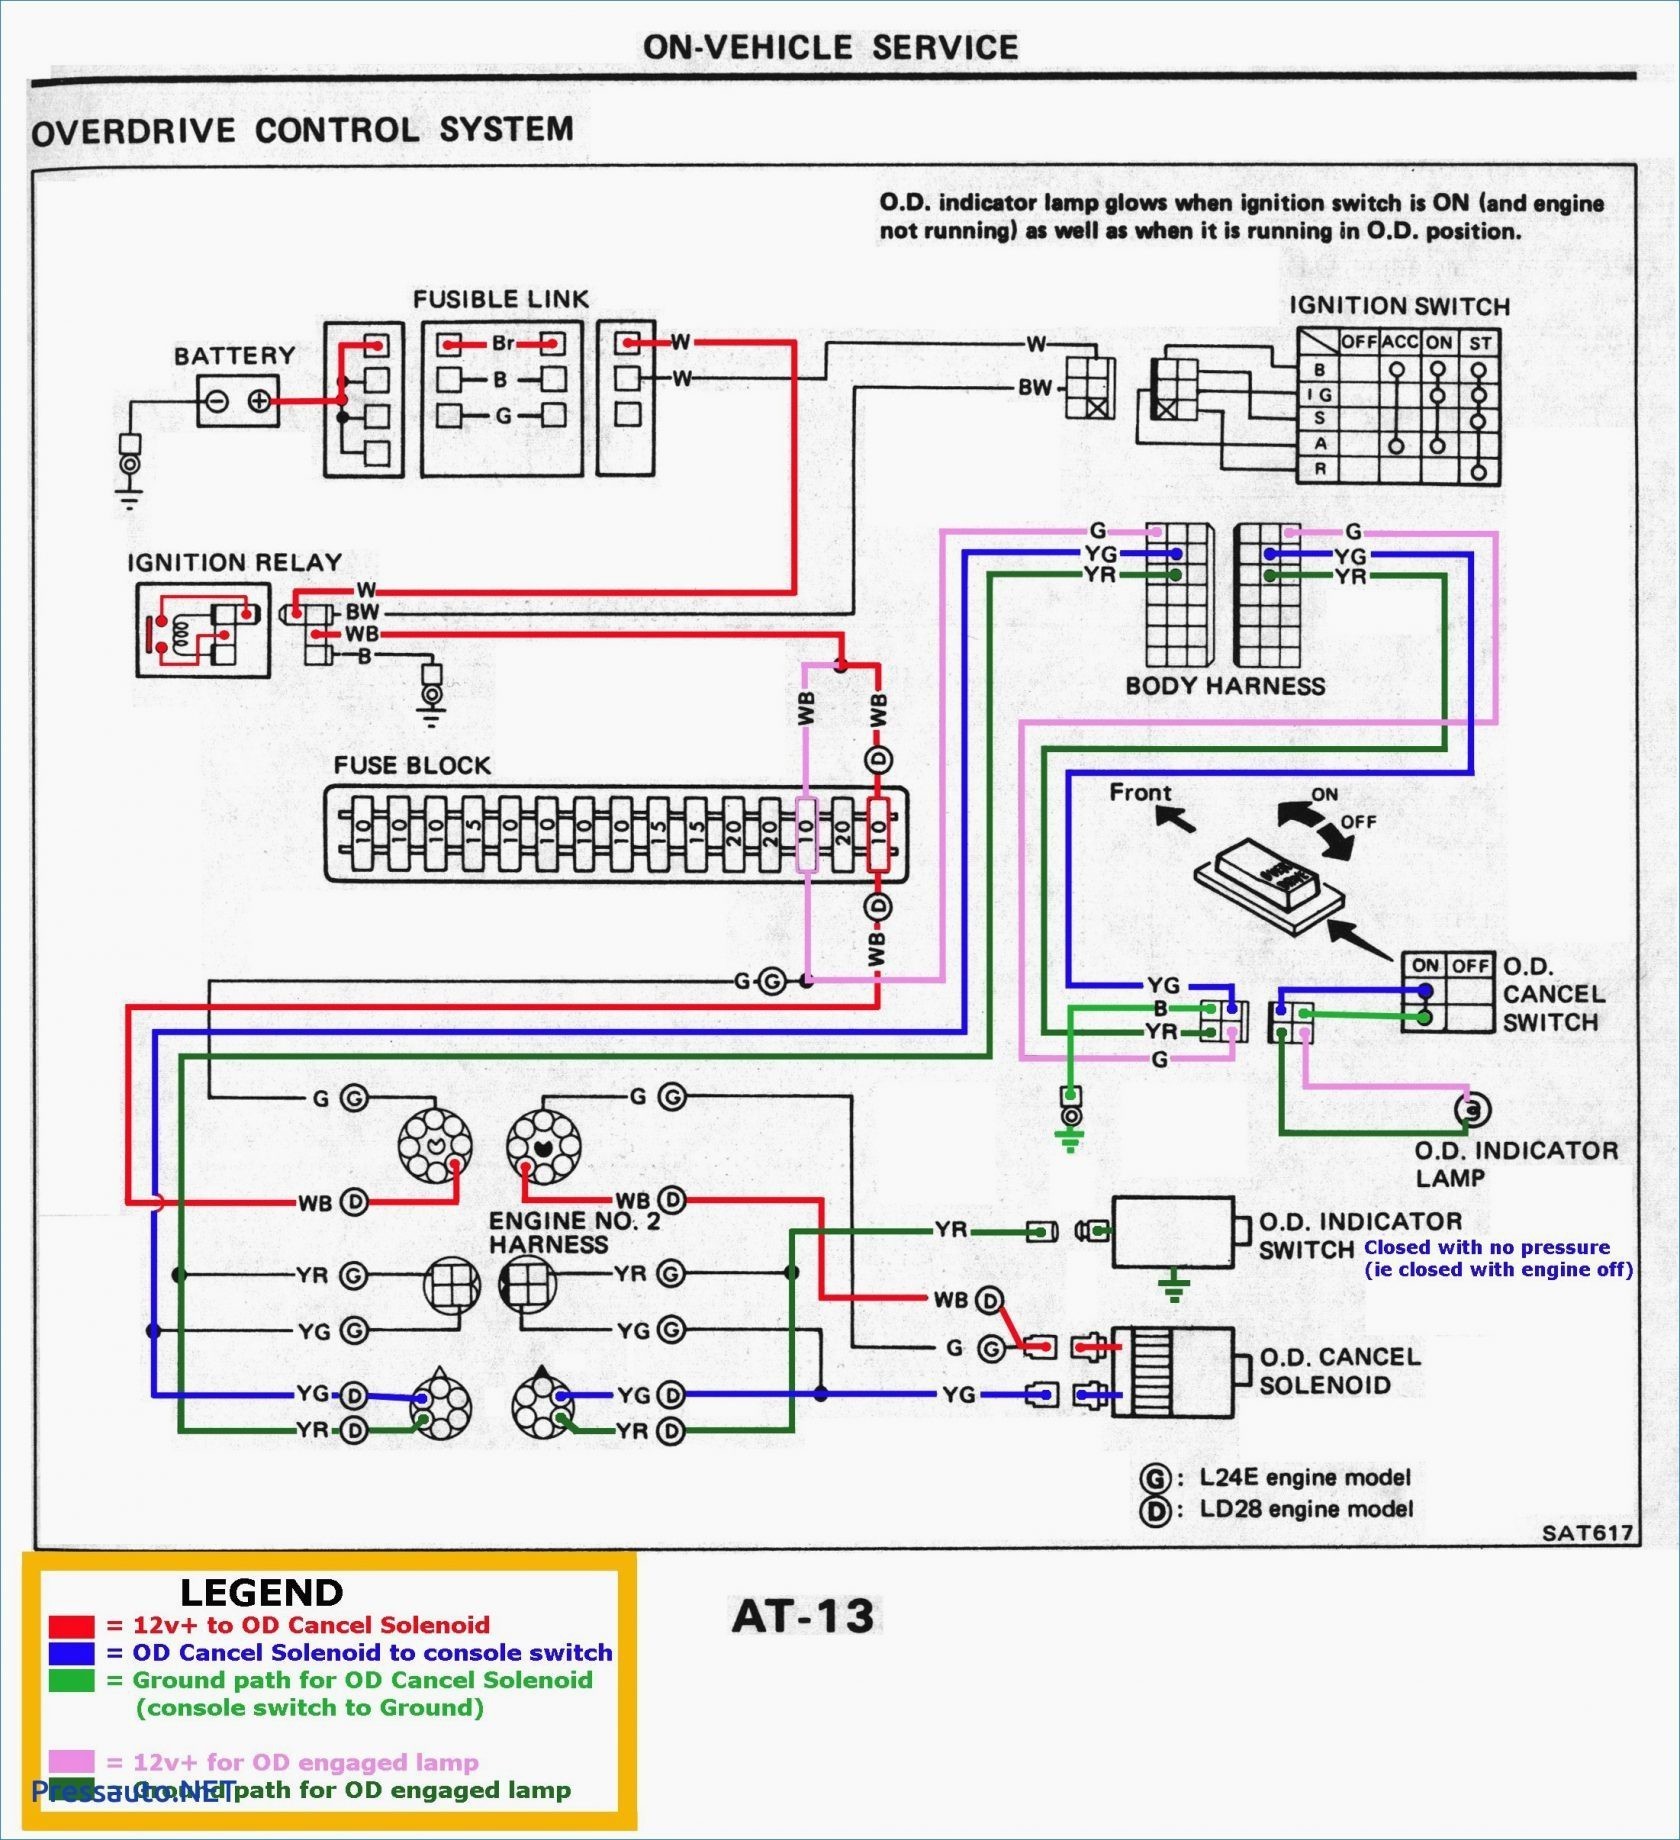 3100 V6 Engine Diagram Chevy 3 9 Engine Diagram Wiring Diagram Datasource Of 3100 V6 Engine Diagram